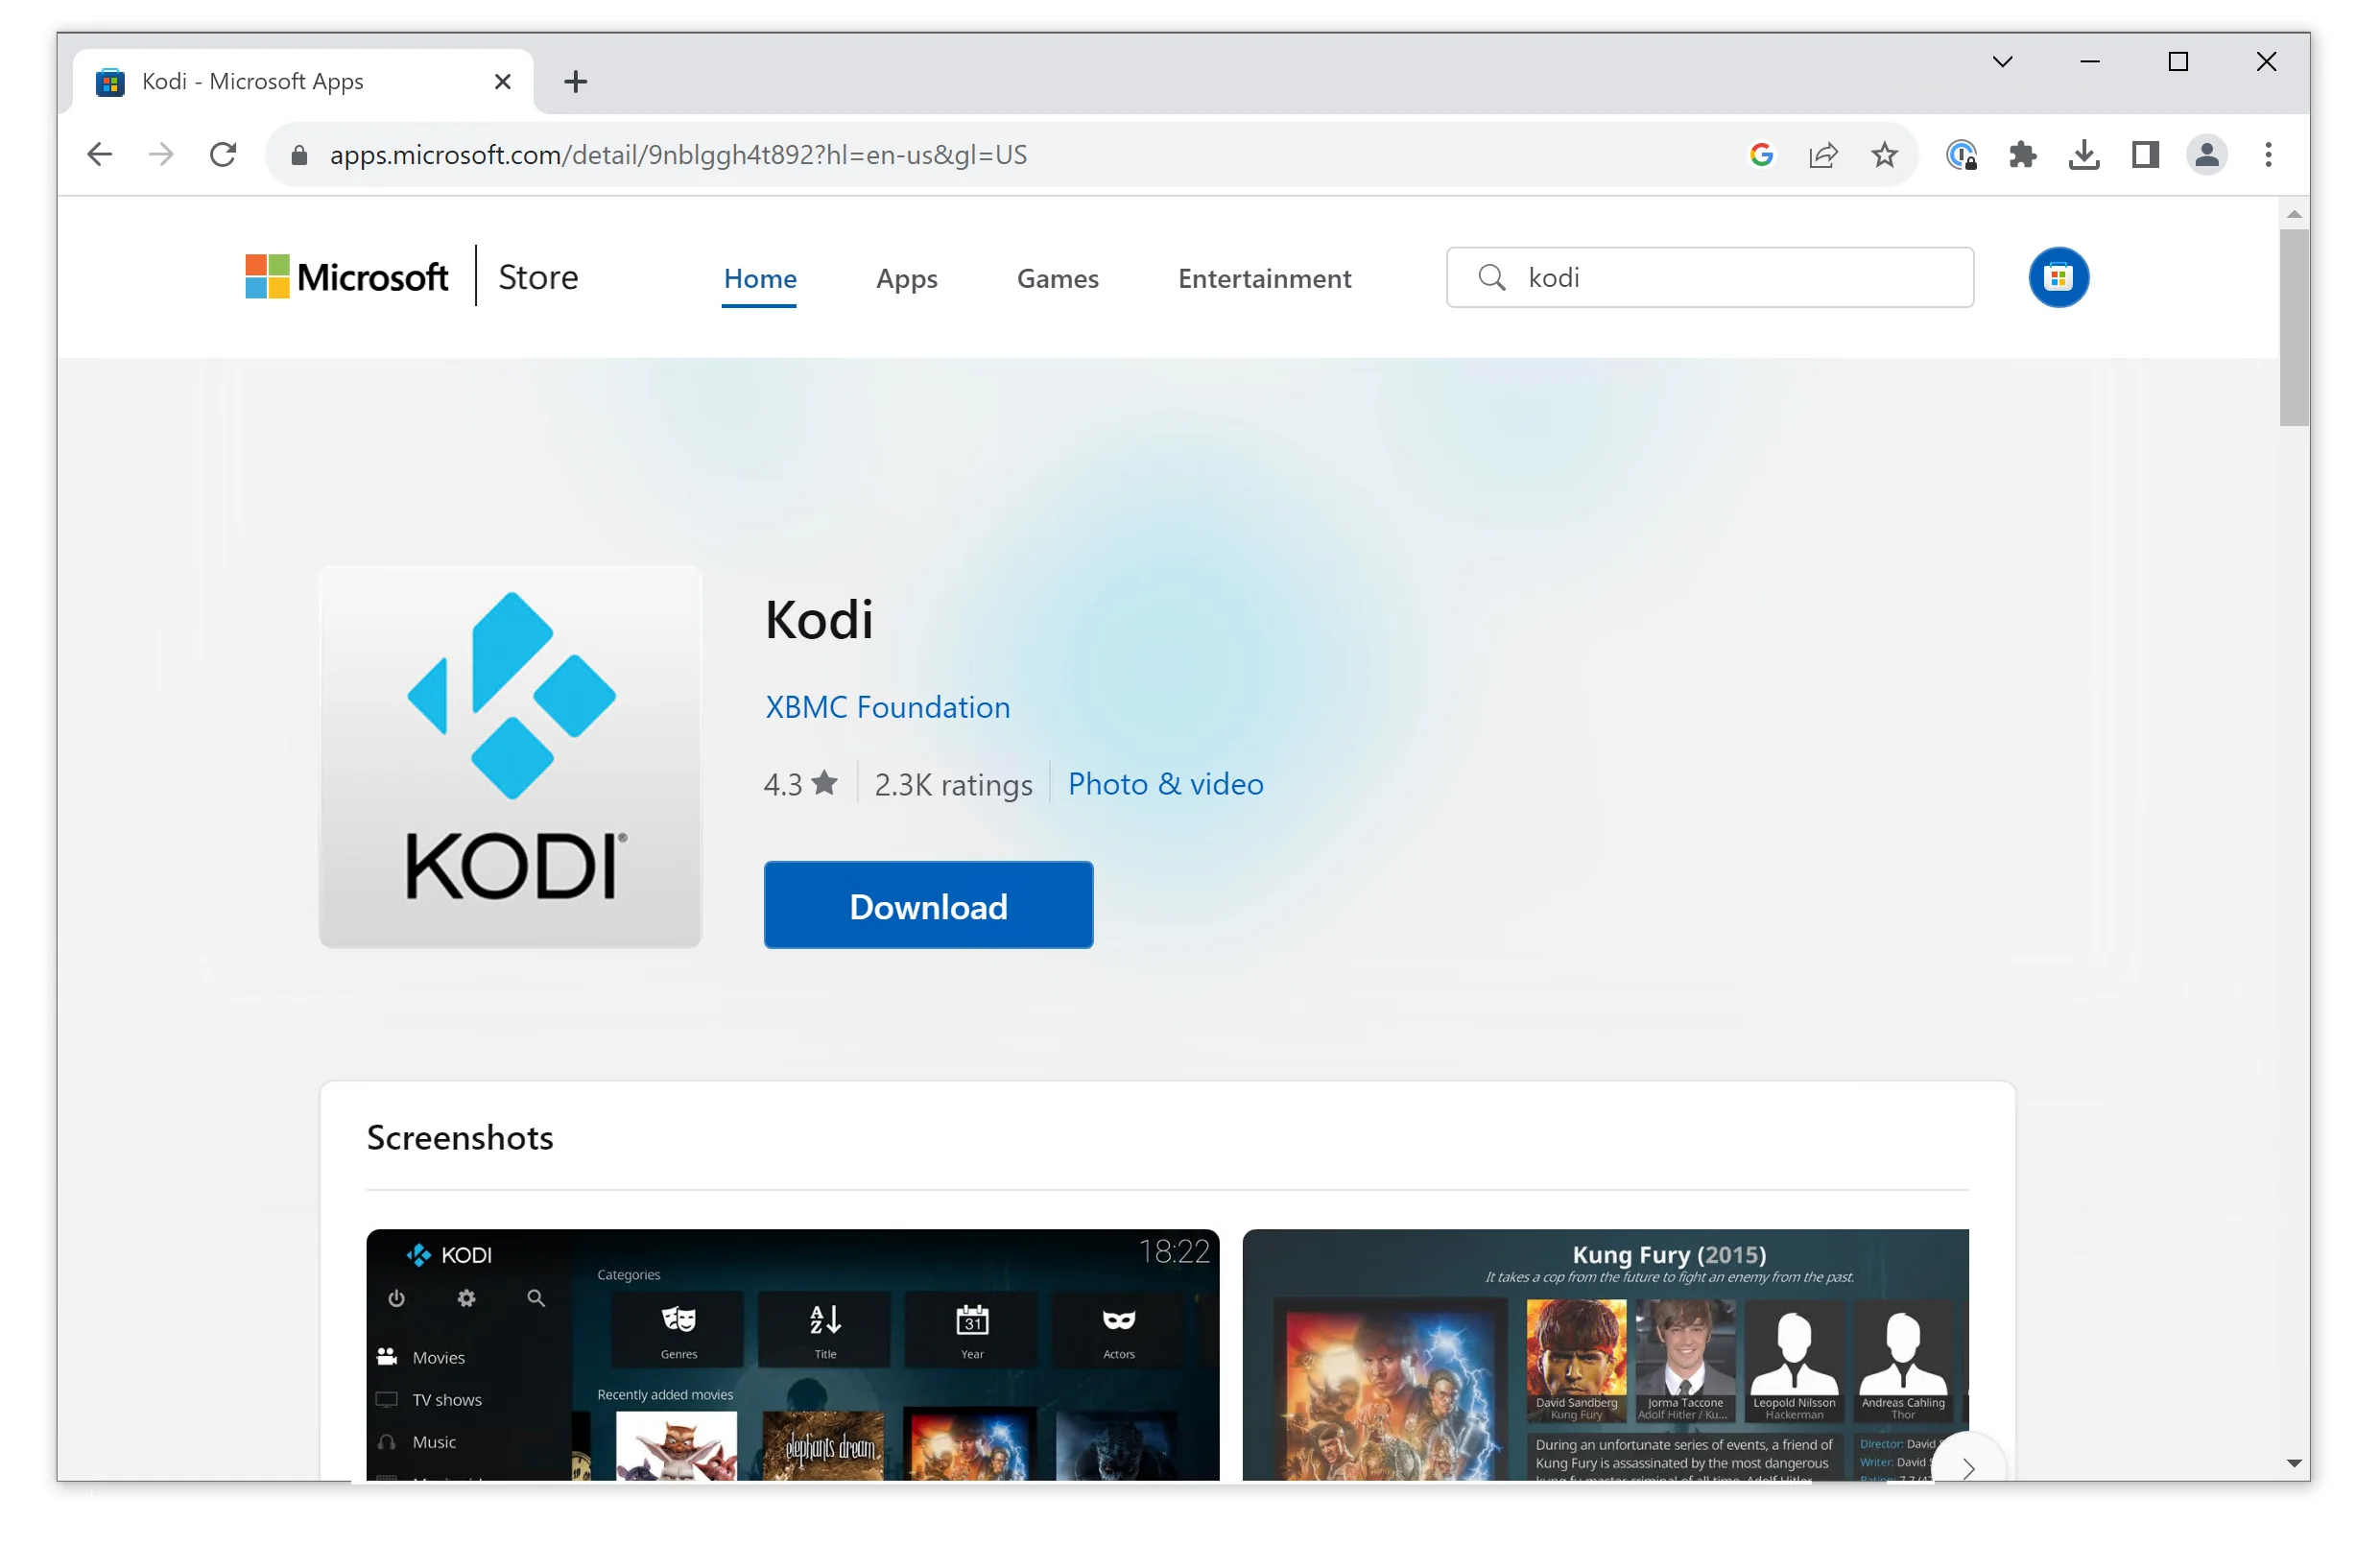 Kodi's listing on the Microsoft Store